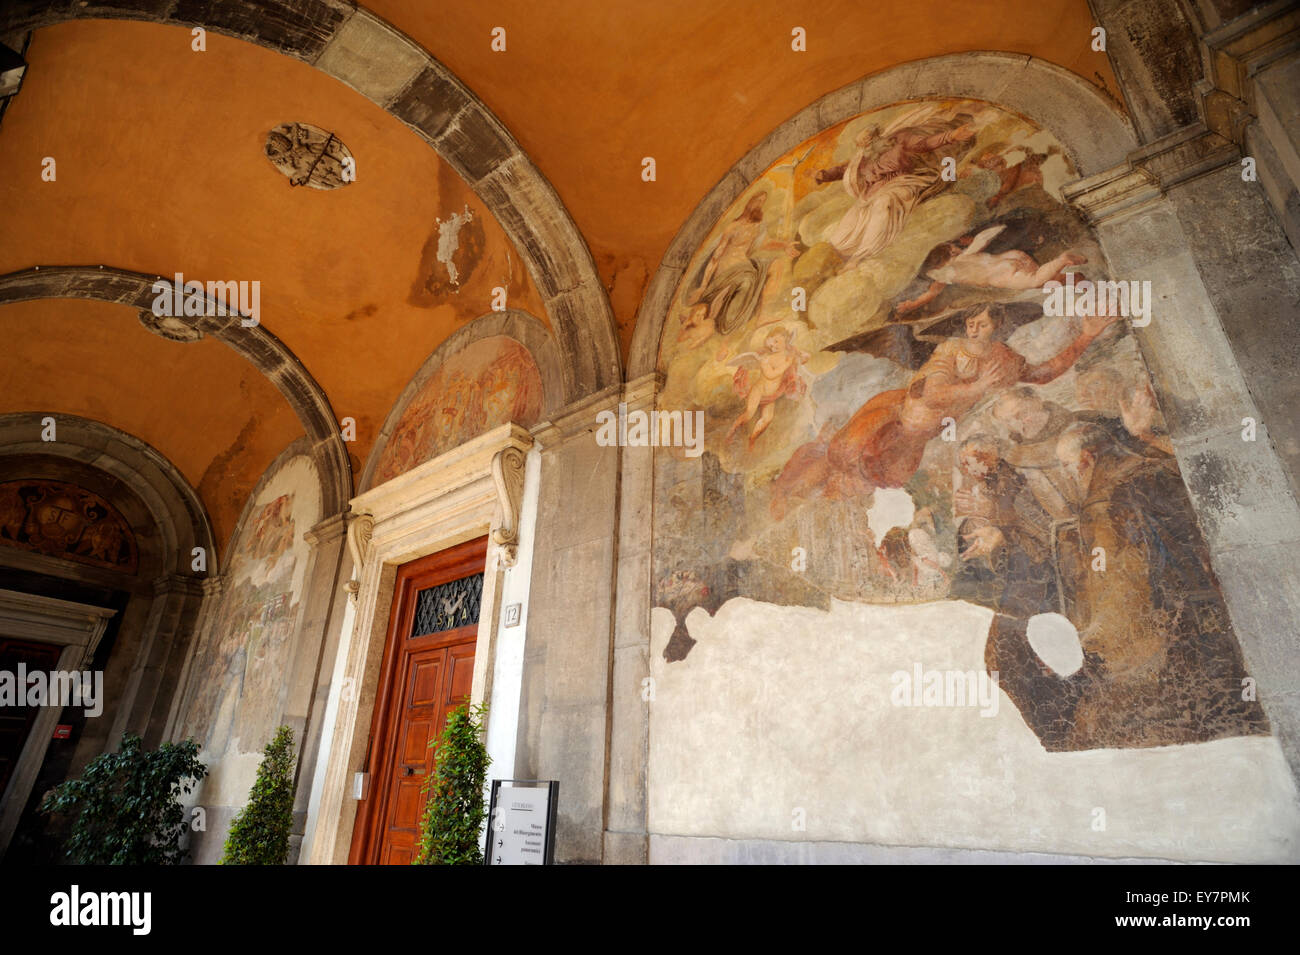 Italy, Rome, Capitoline Hill, Convent of Santa Maria in Aracoeli, frescos in the loggia outside the monastery Stock Photo